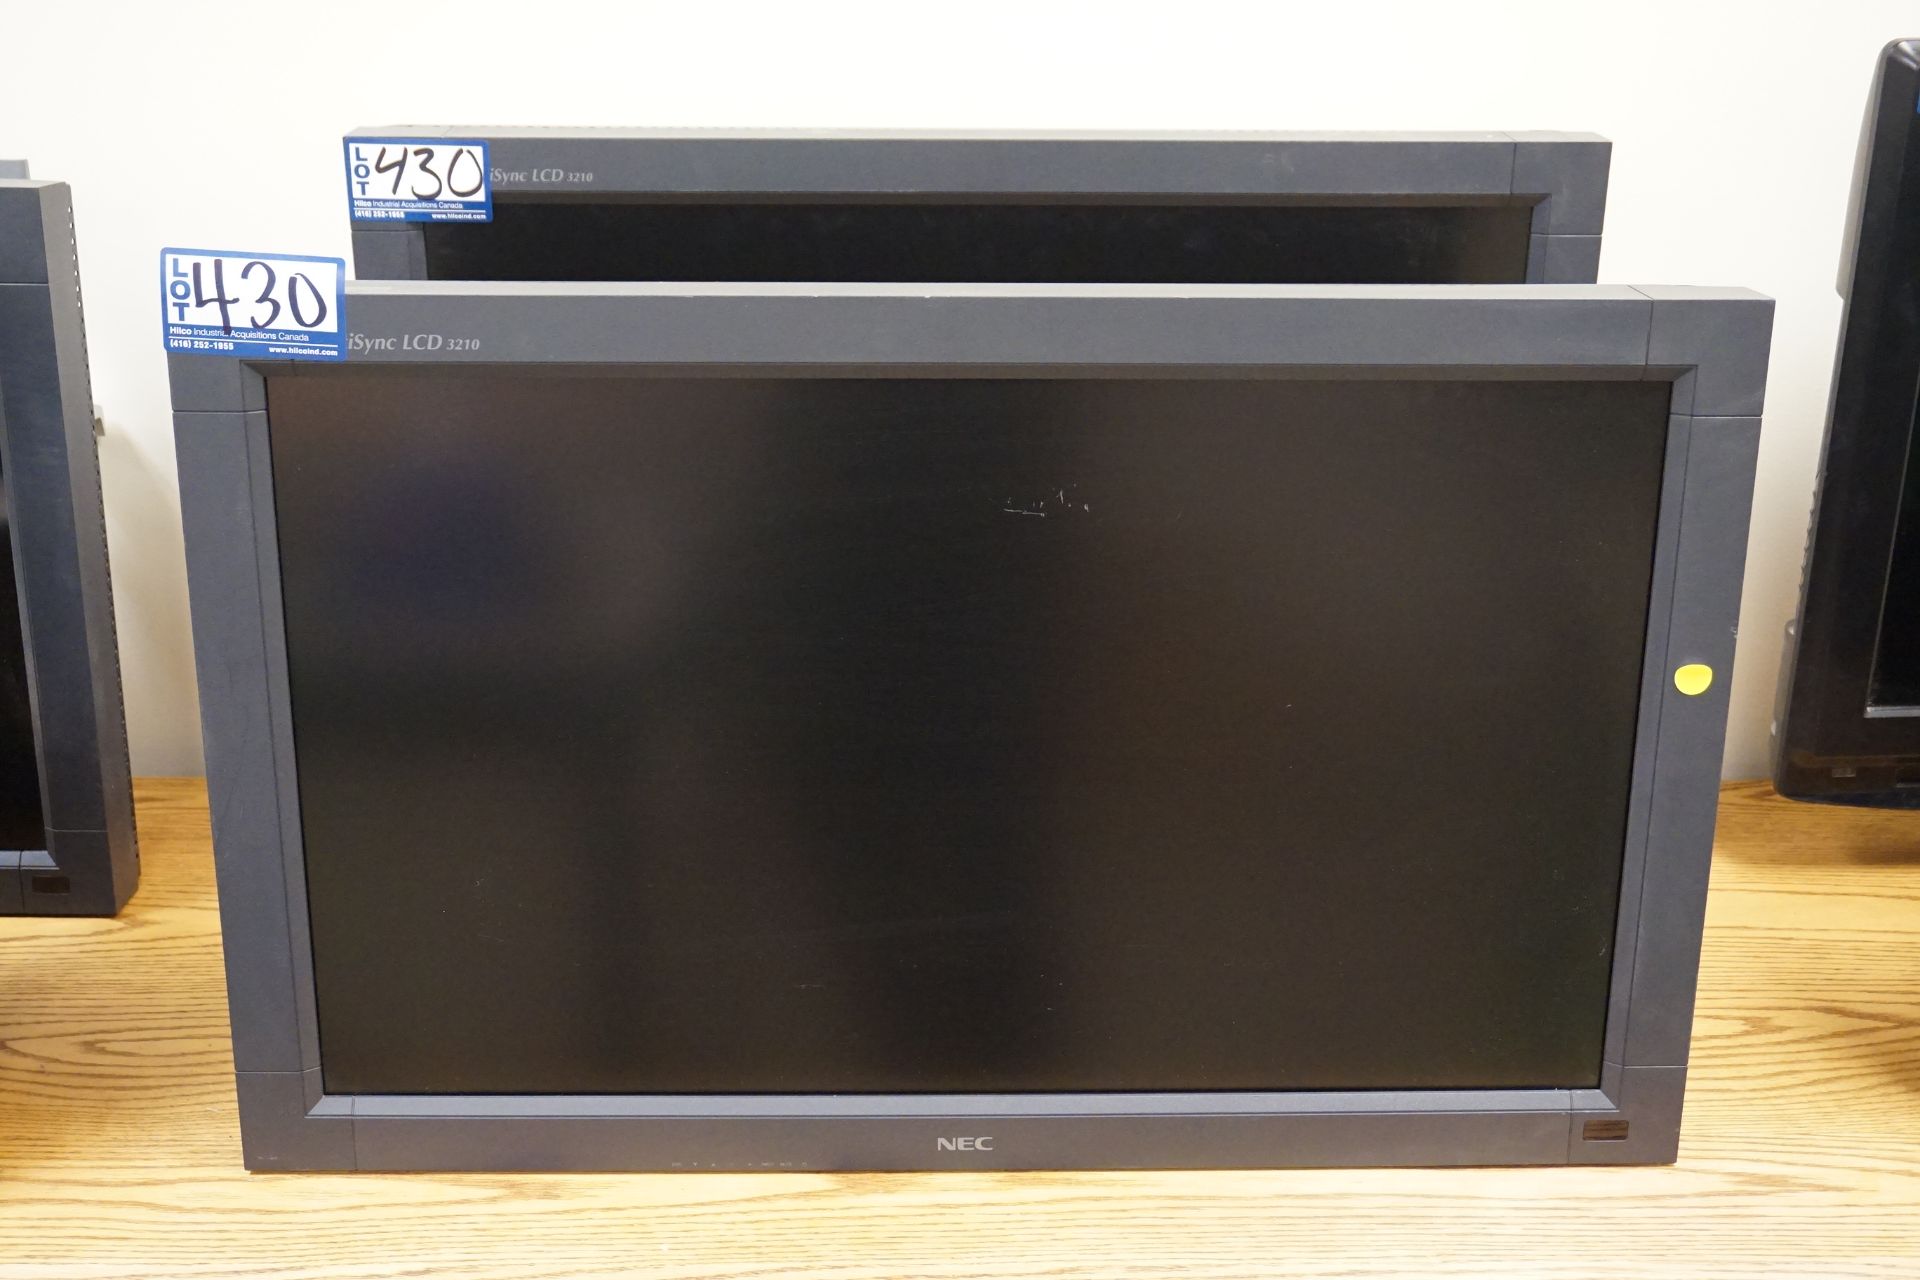 NEC Model MultiSync LCD3210 Monitors